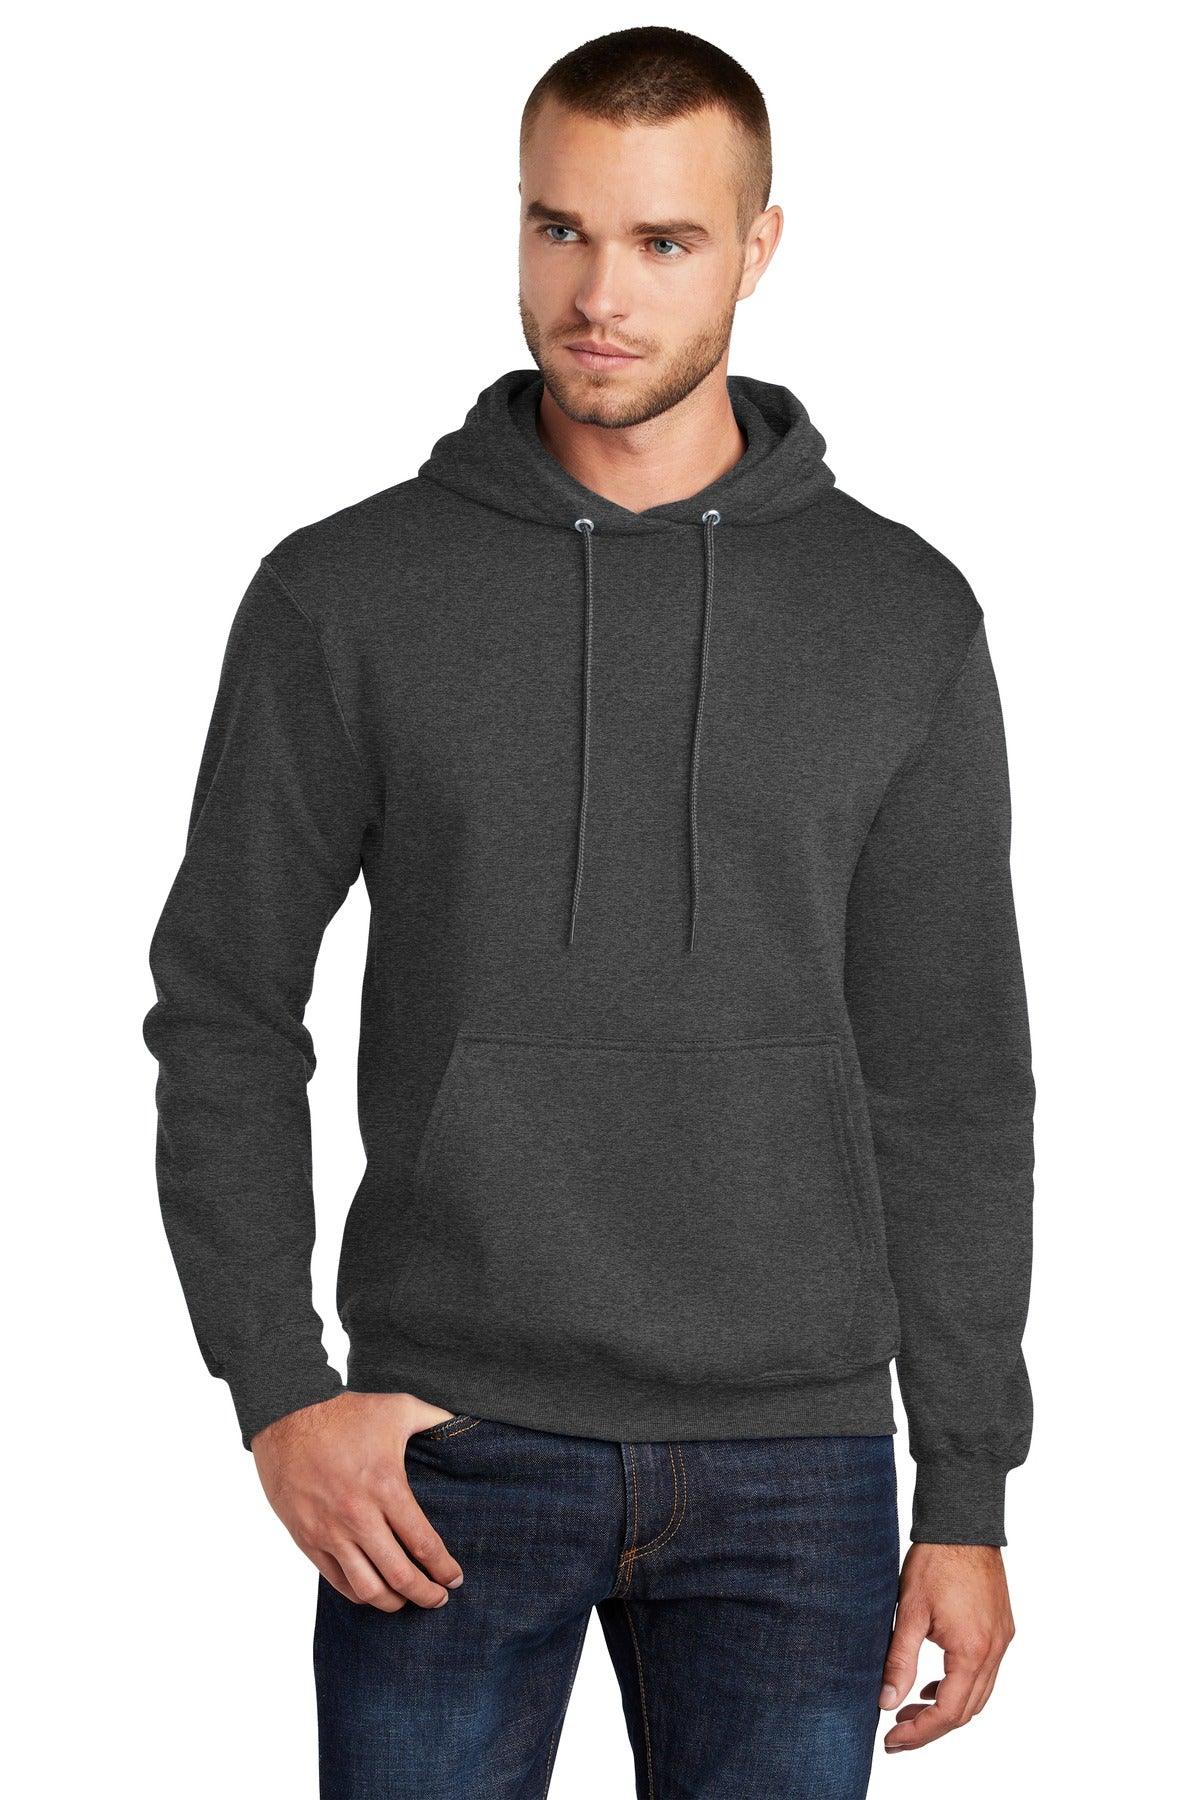 Port & Company Tall Core Fleece Pullover Hooded Sweatshirt PC78HT - Dresses Max